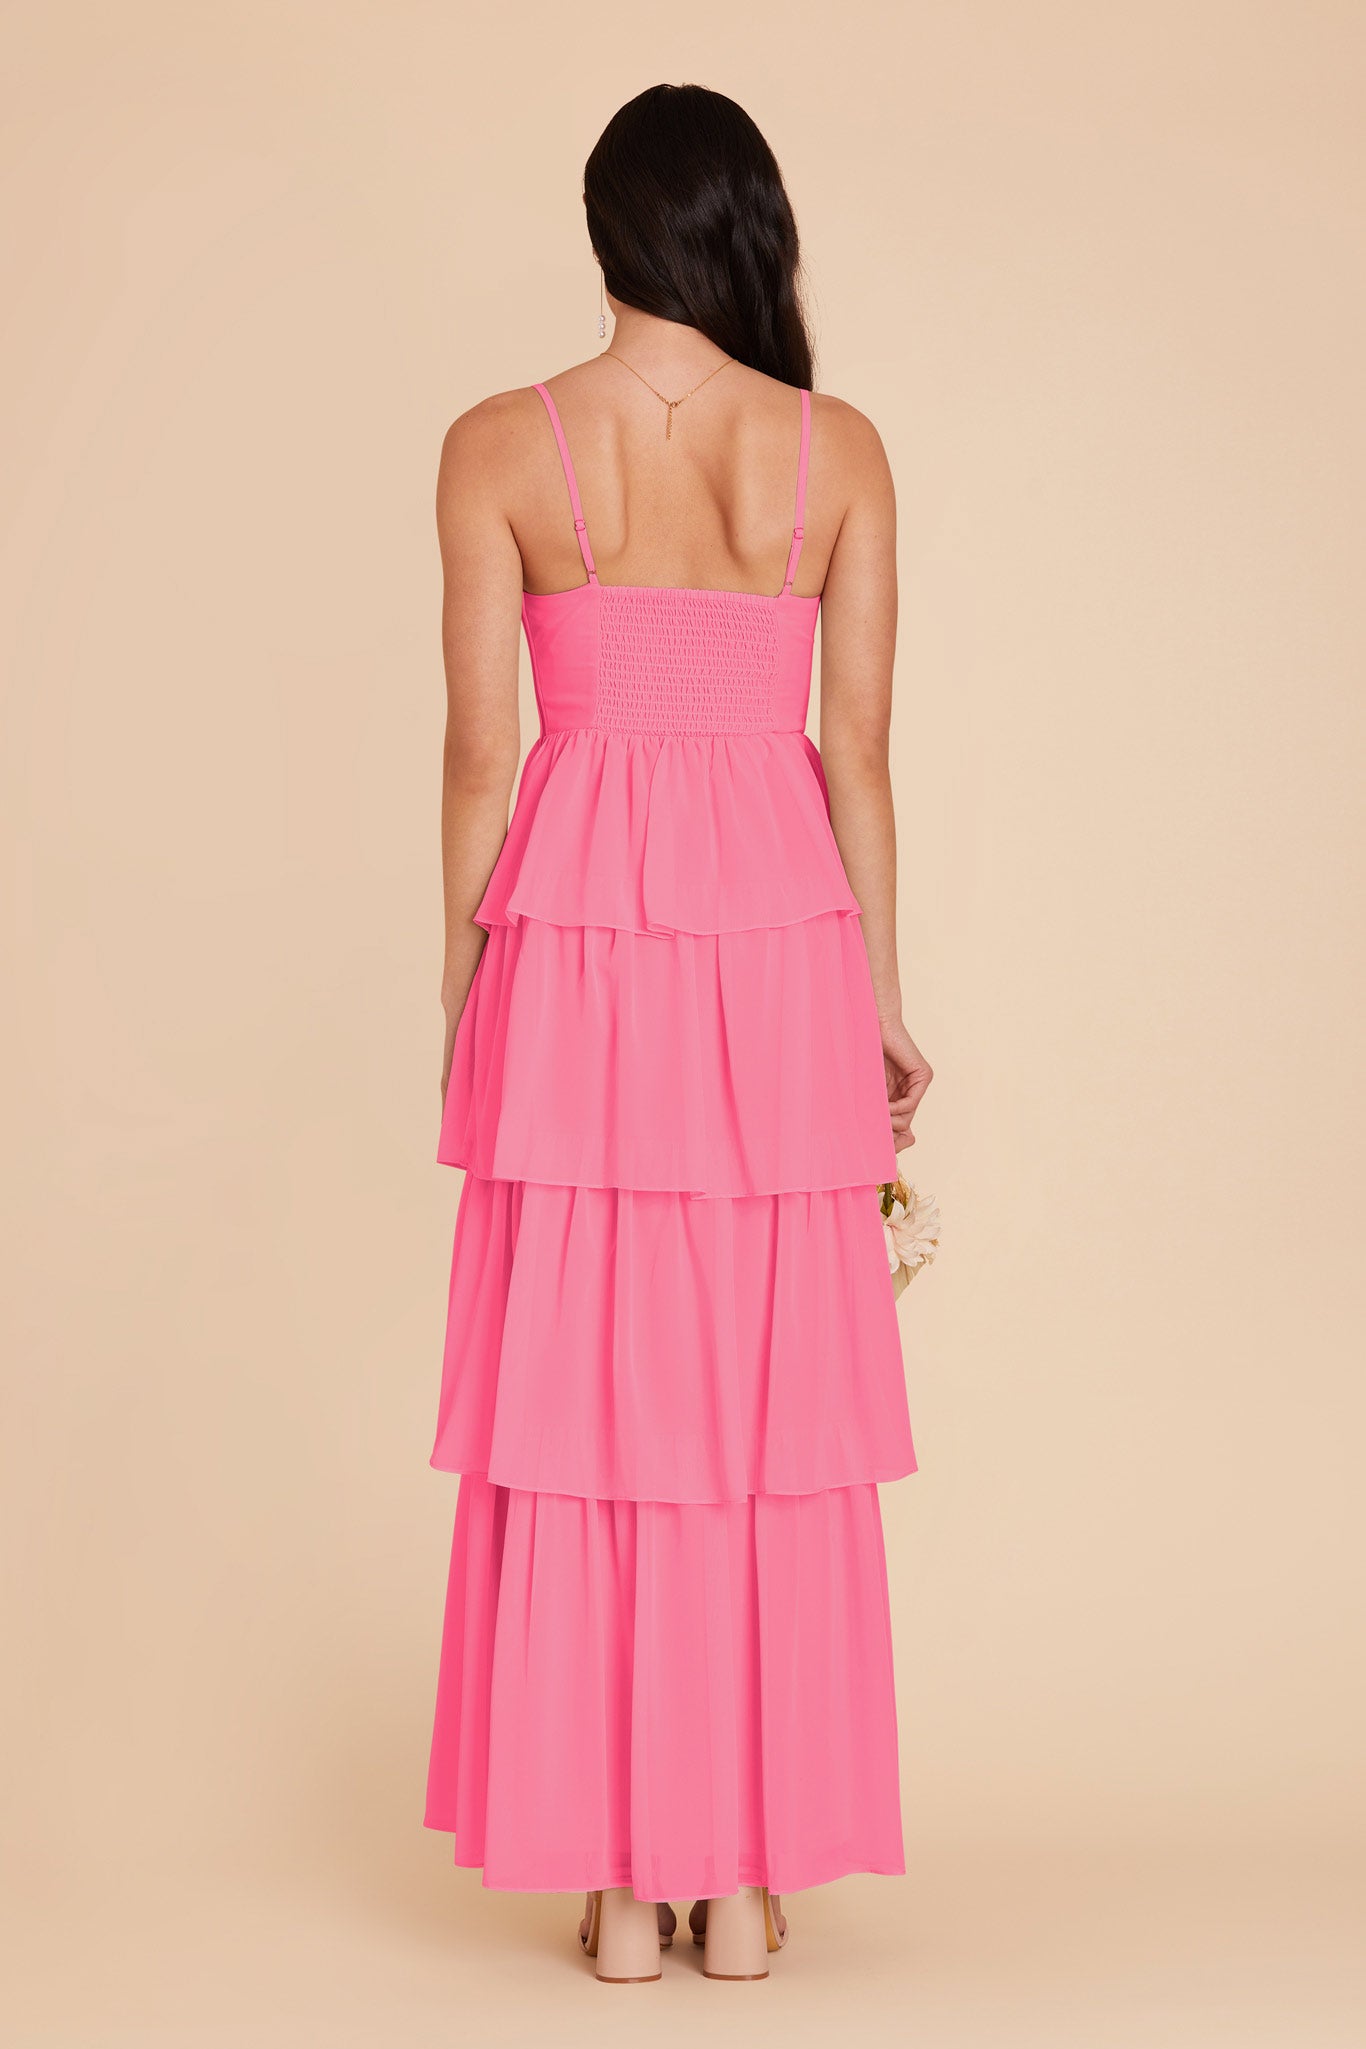 Bon Bon Pink Lola Chiffon Dress by Birdy Grey